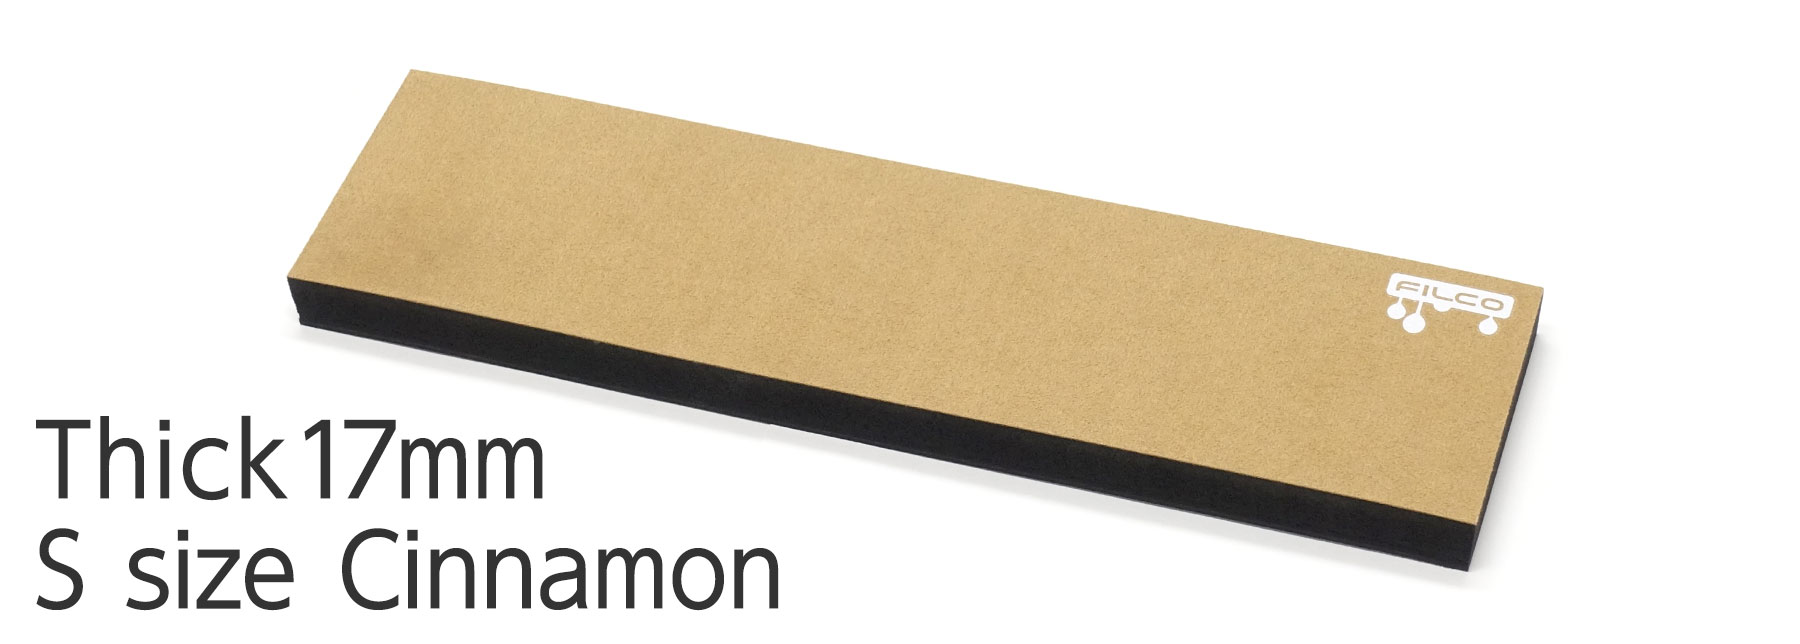 FILCO Majestouch Wrist Rest "Macaron" Thick 17mm / S size / Cinnamon